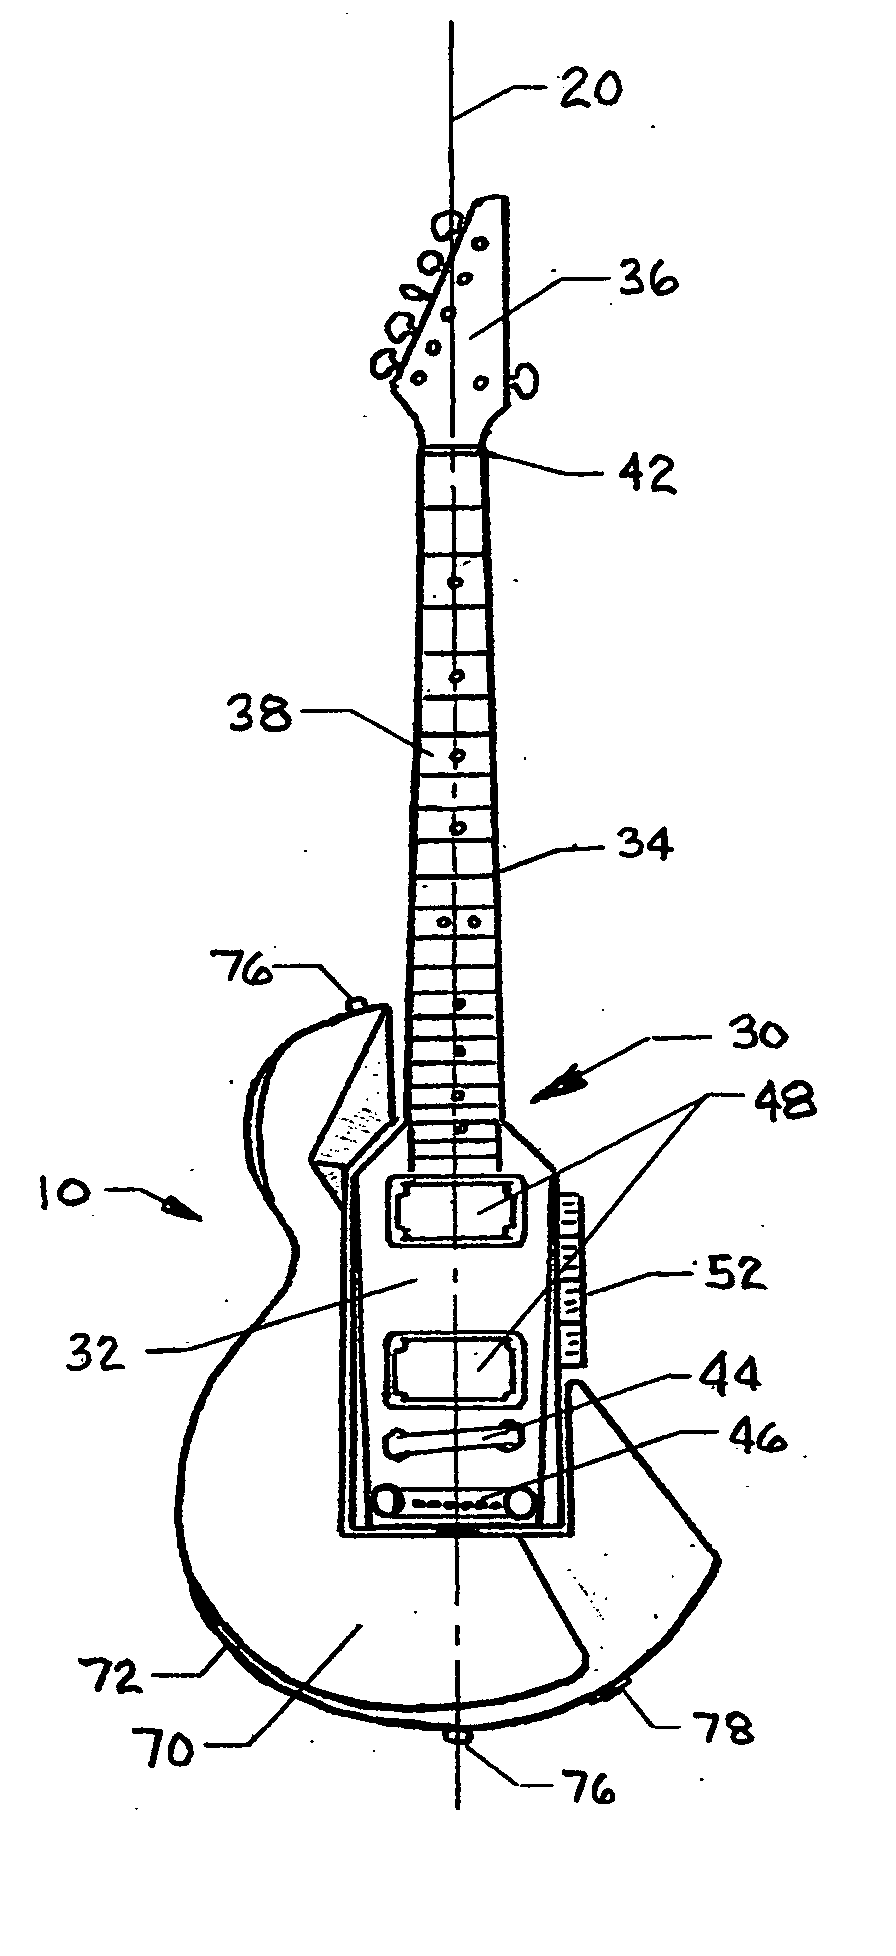 User-adjustable ergonomic stringed musical instrument